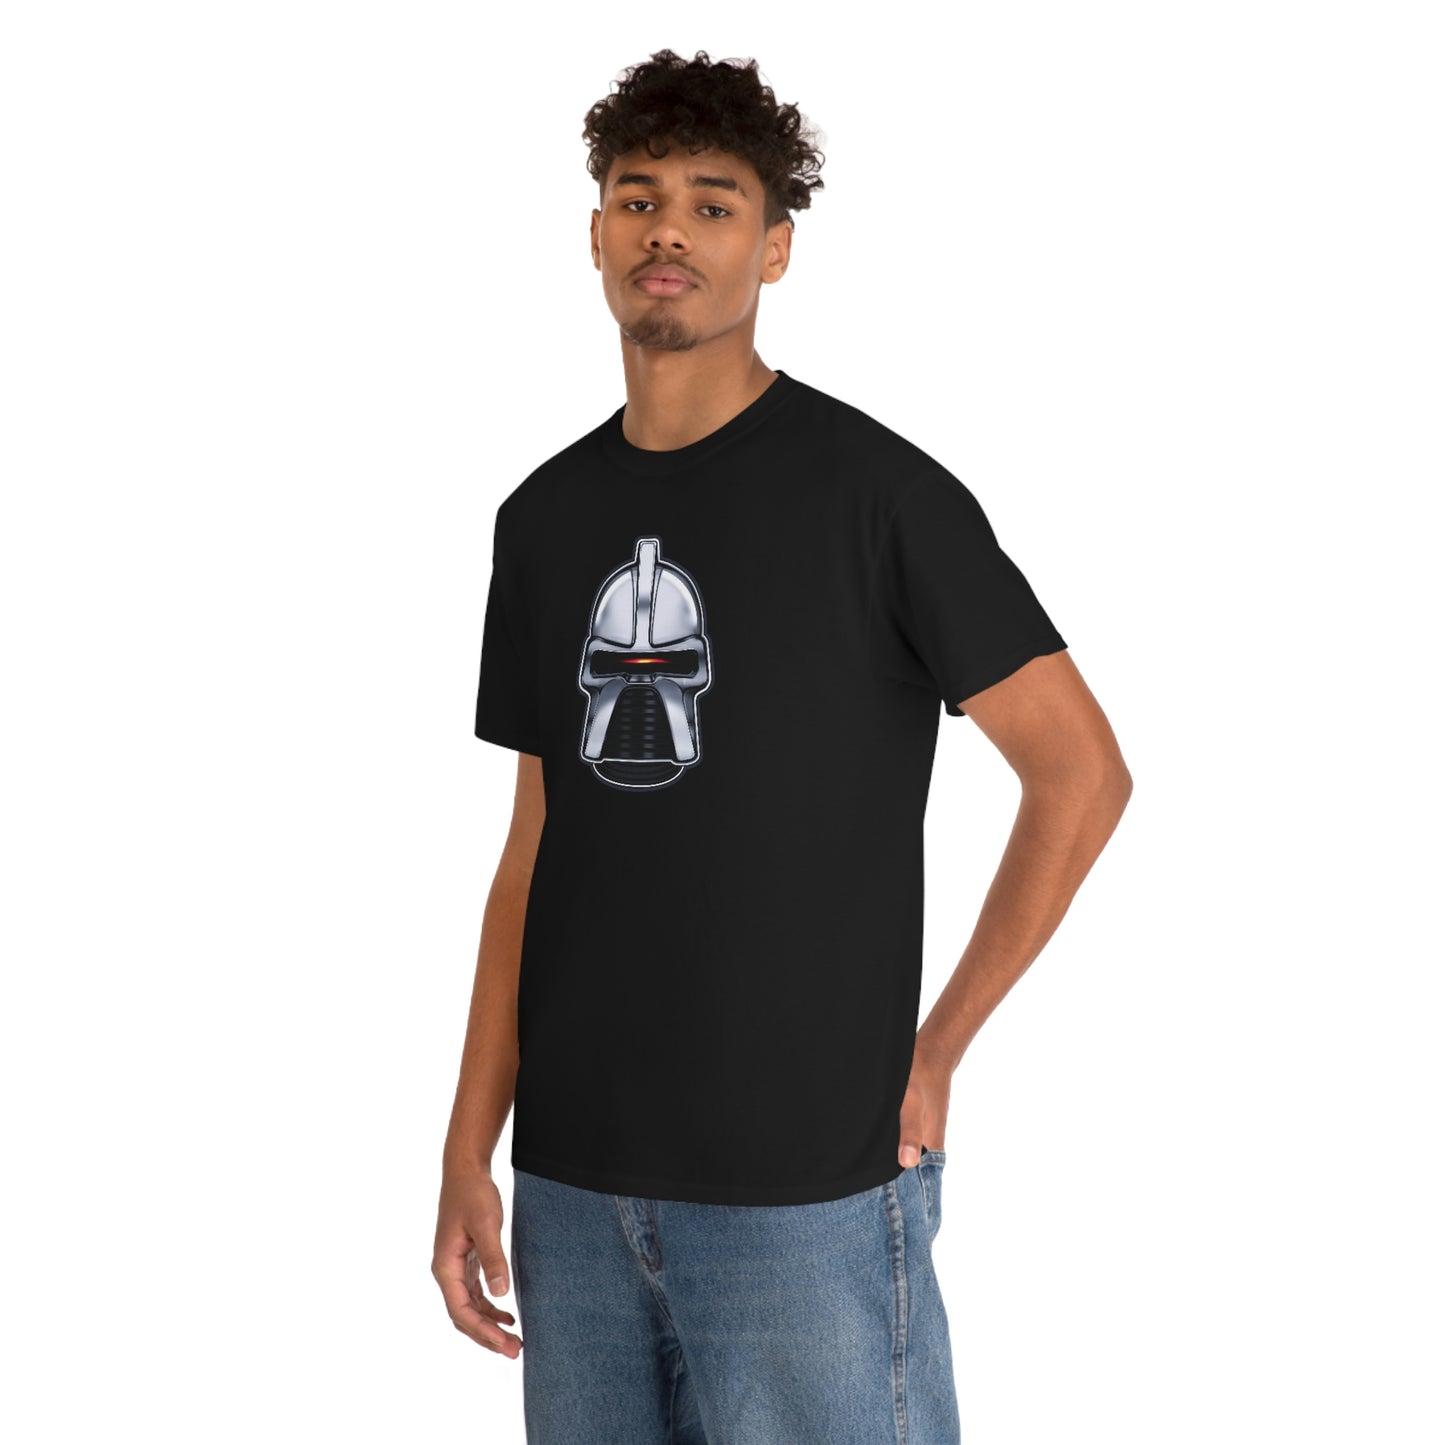 Cylon T-Shirt